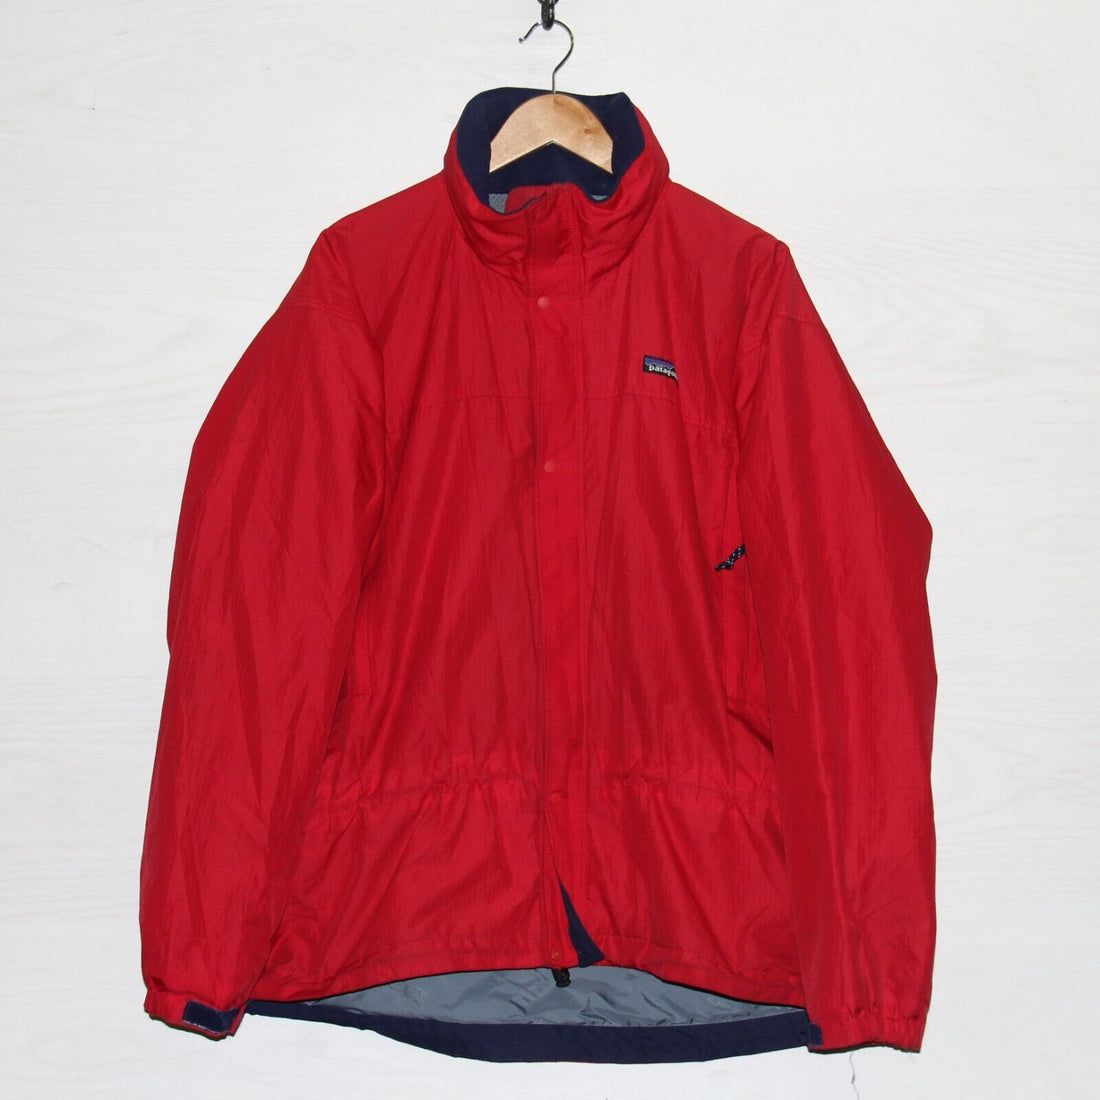 Vintage Patagonia Windbreaker Light Jacket Size Large Red